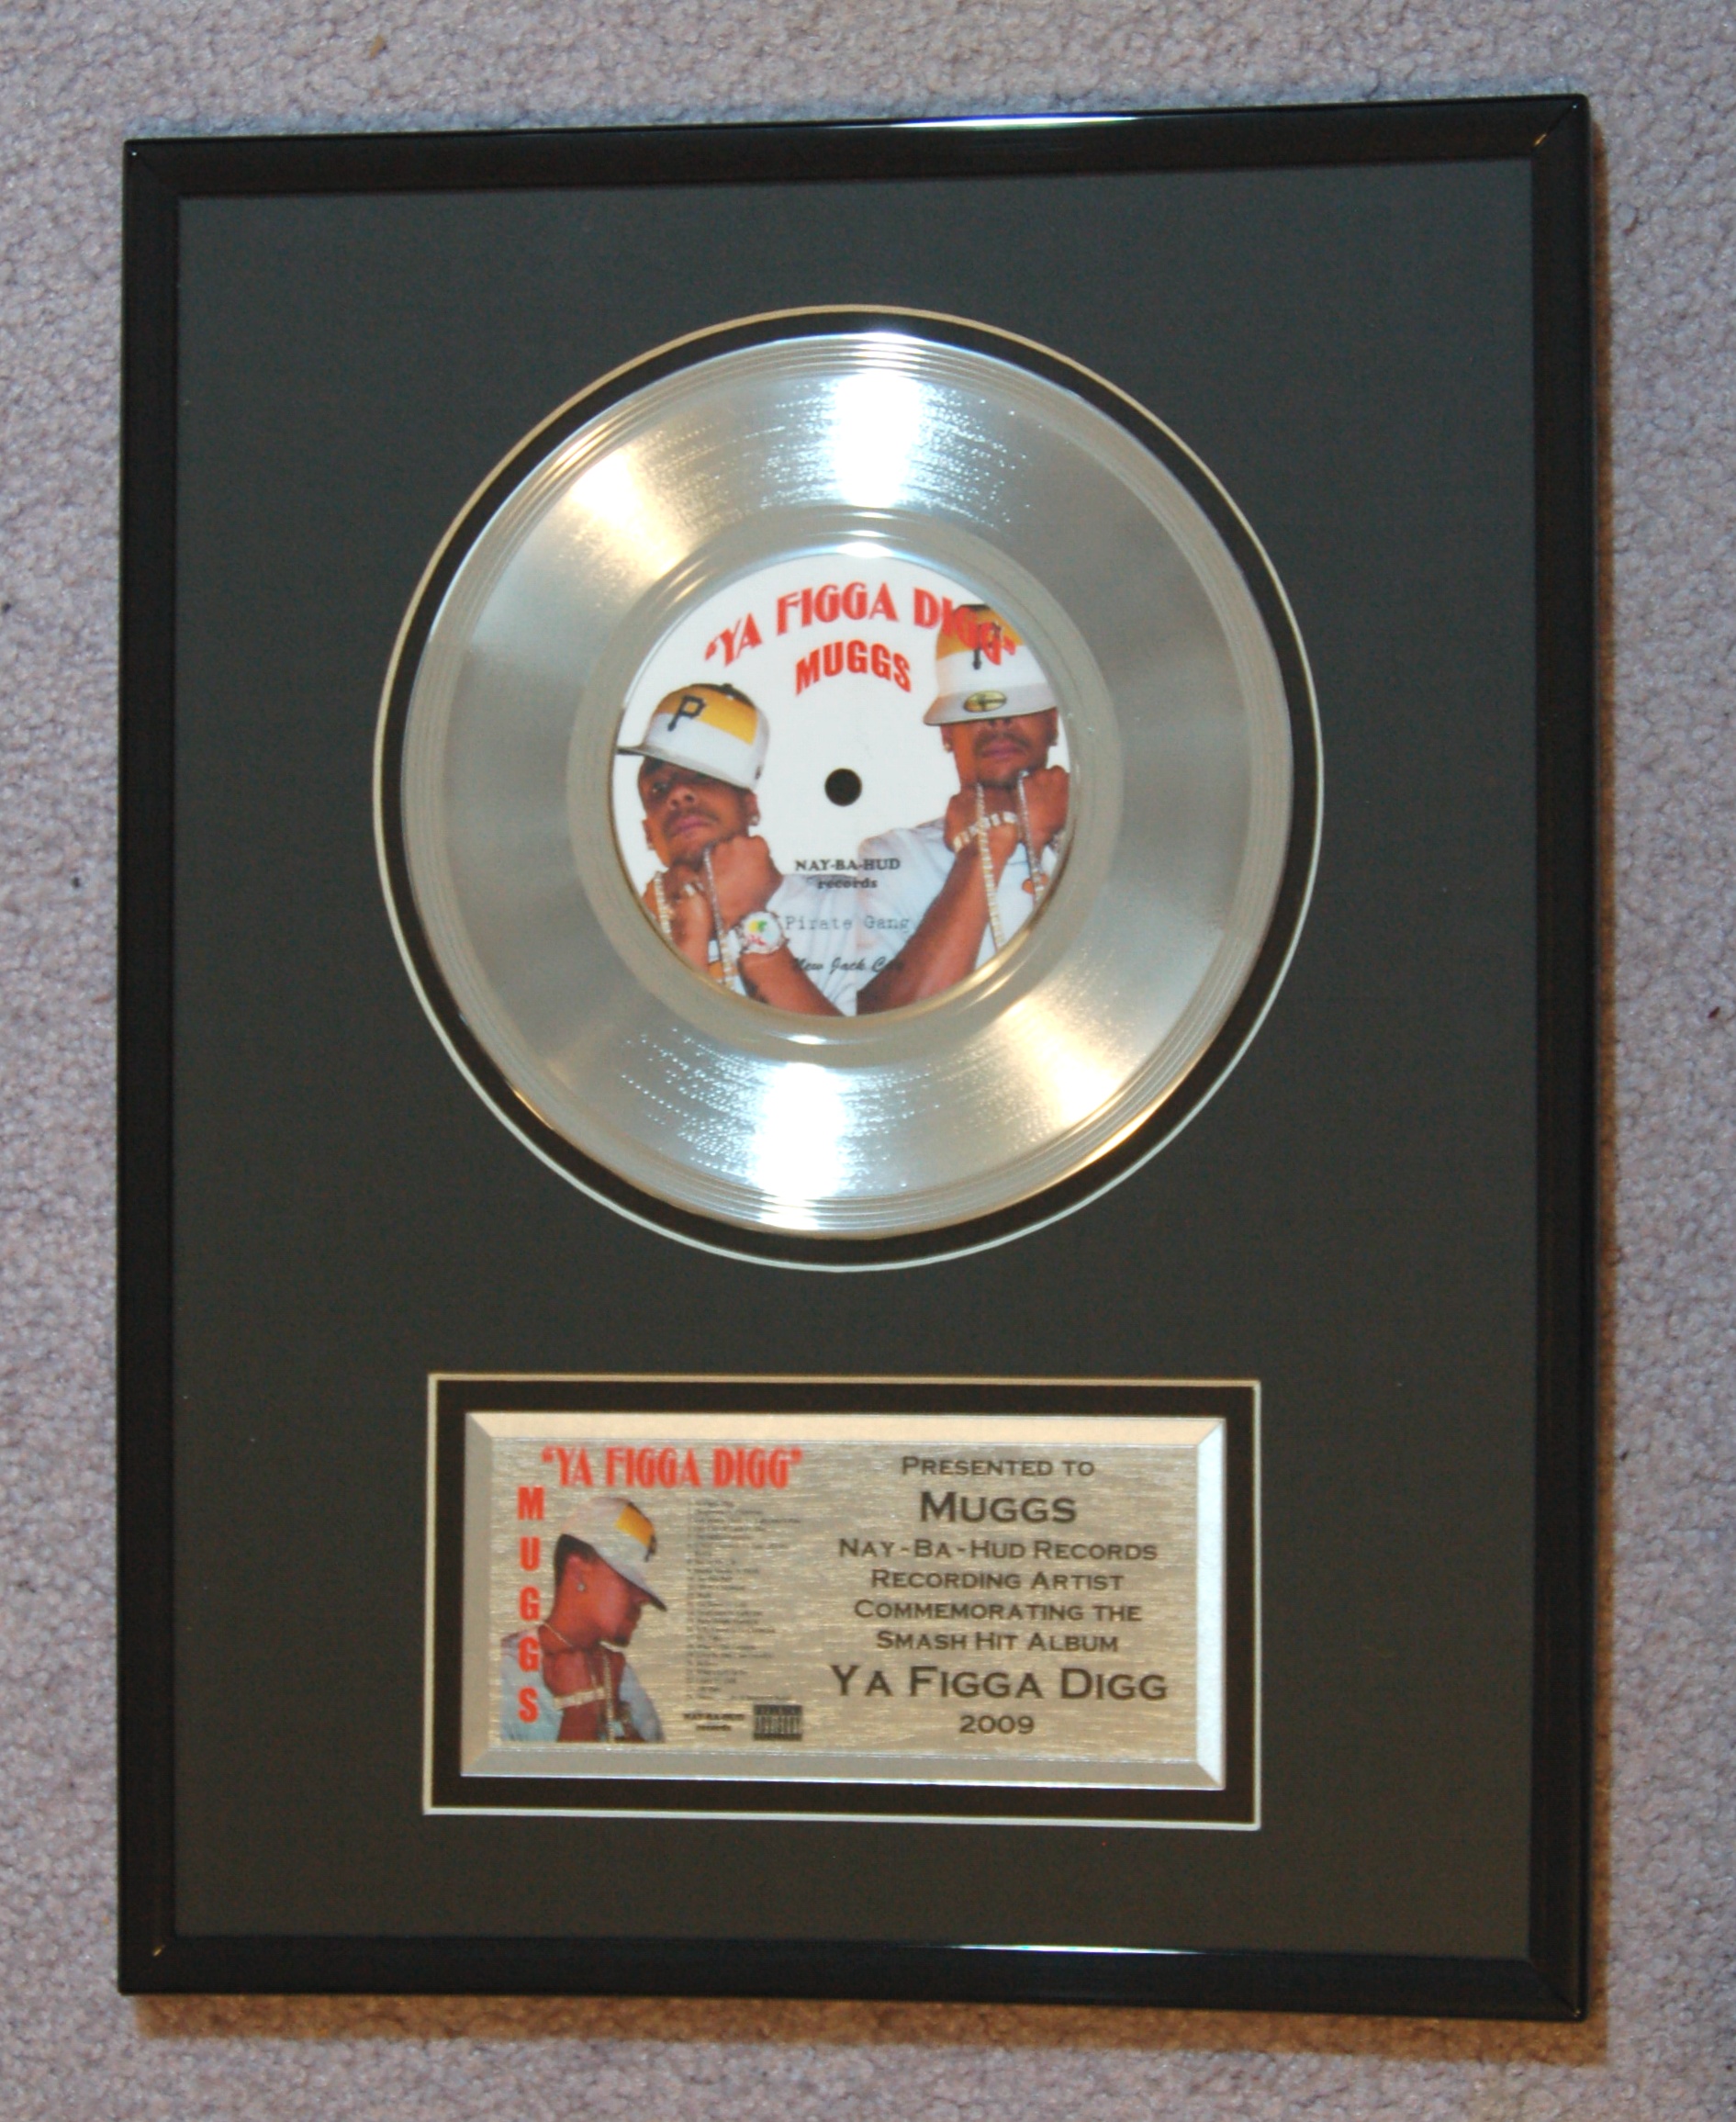 Gold Record Awards, and Platinum Record Awards